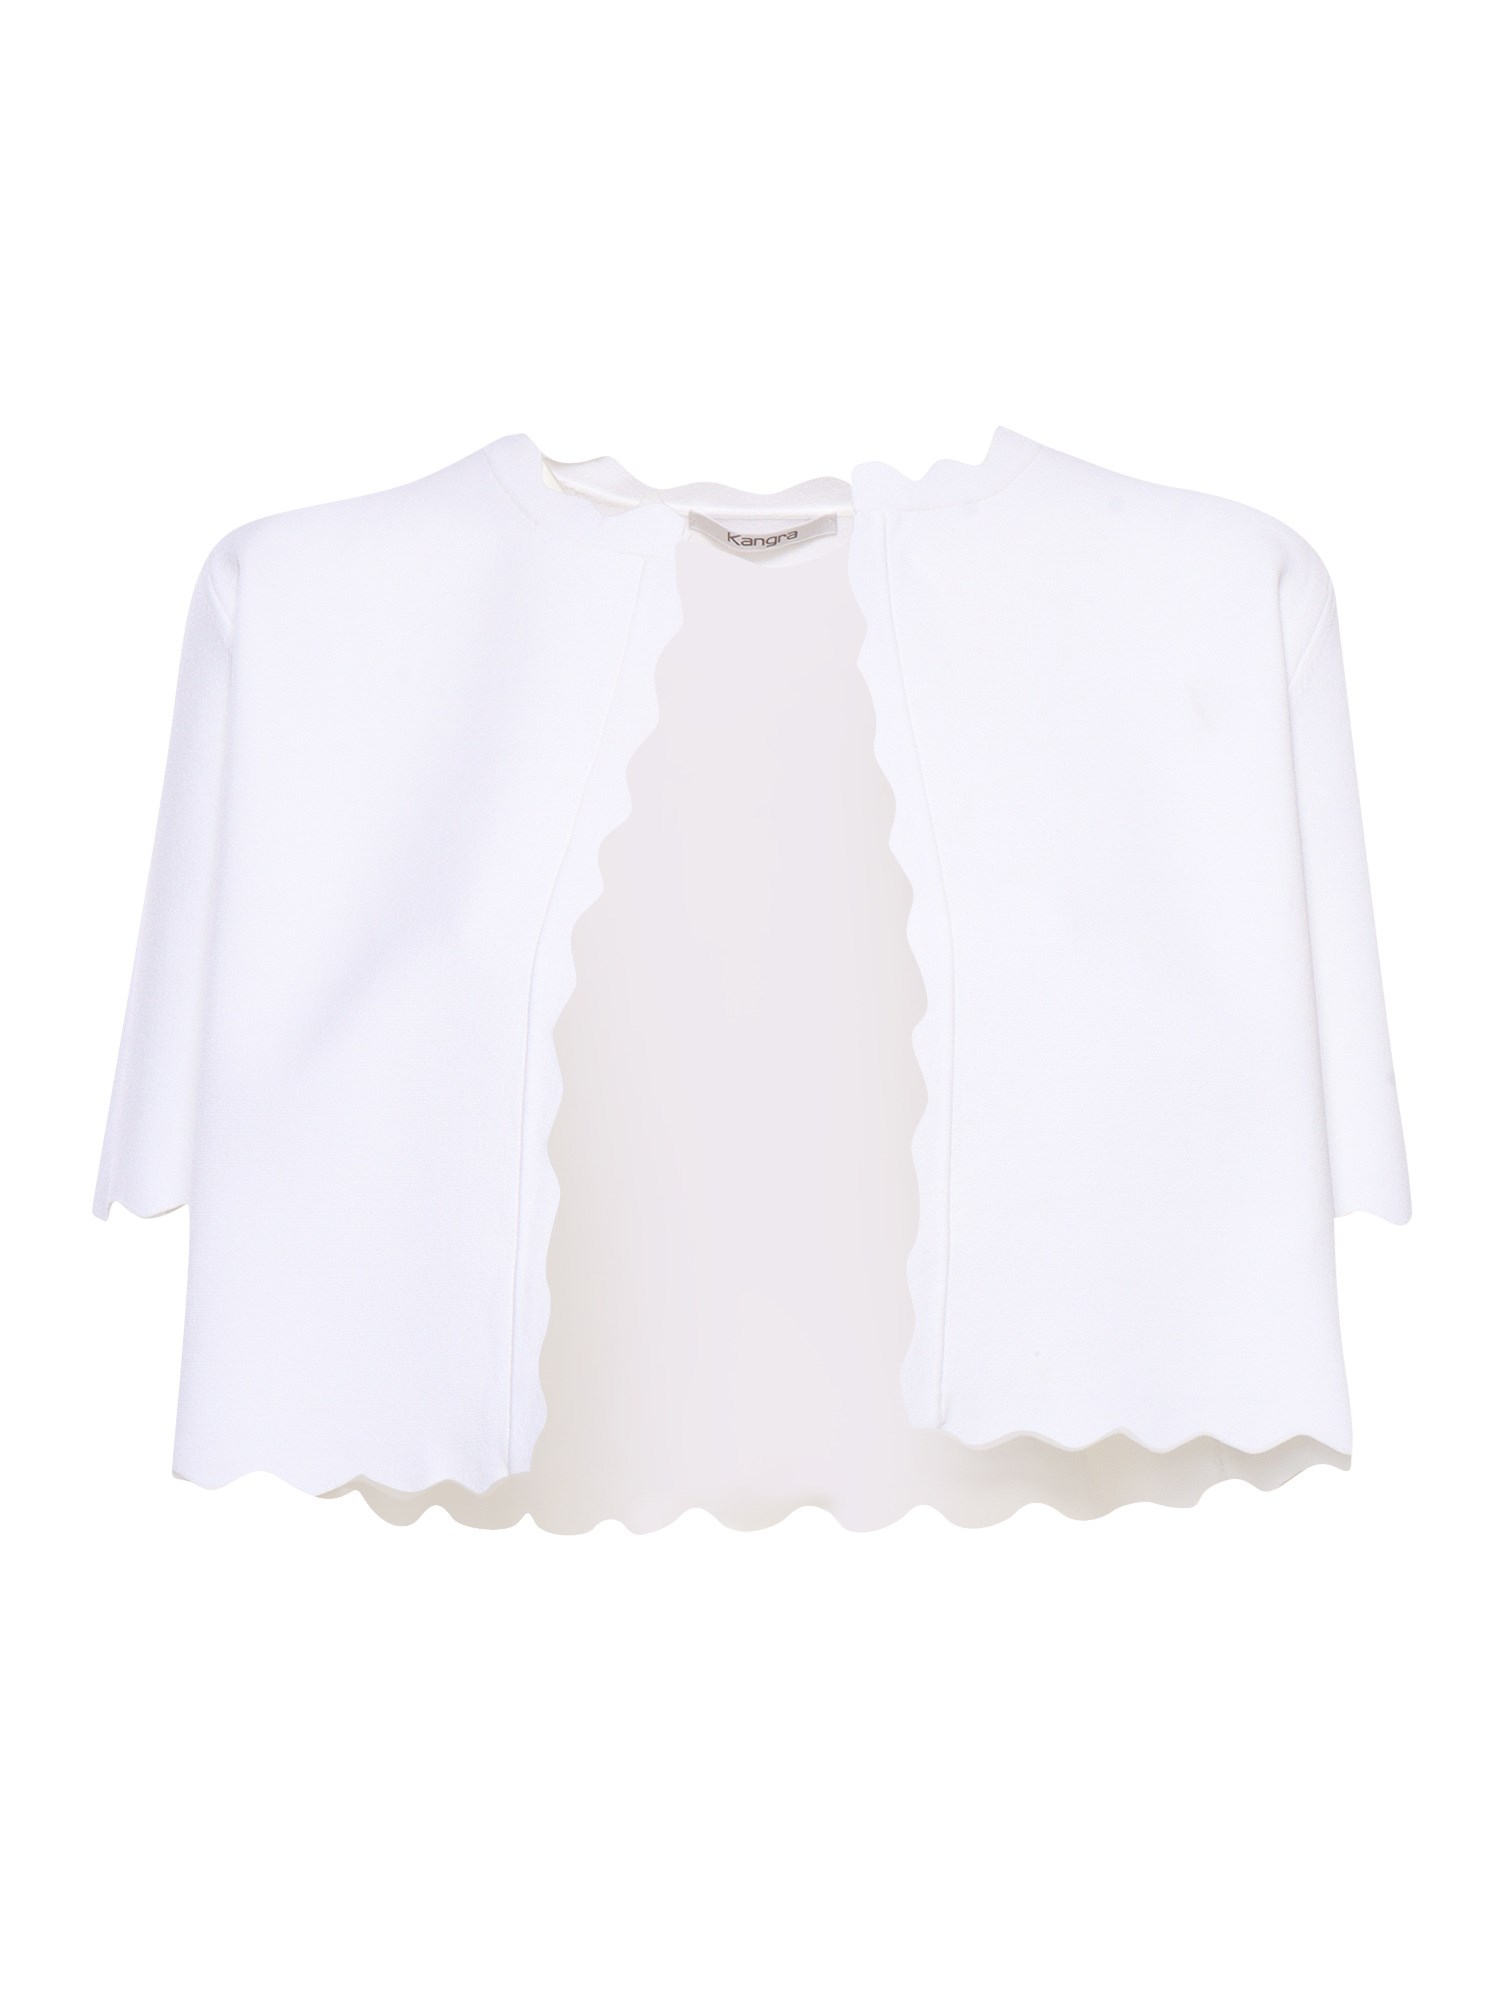 Shop Kangra Cashmere Short White Jacket